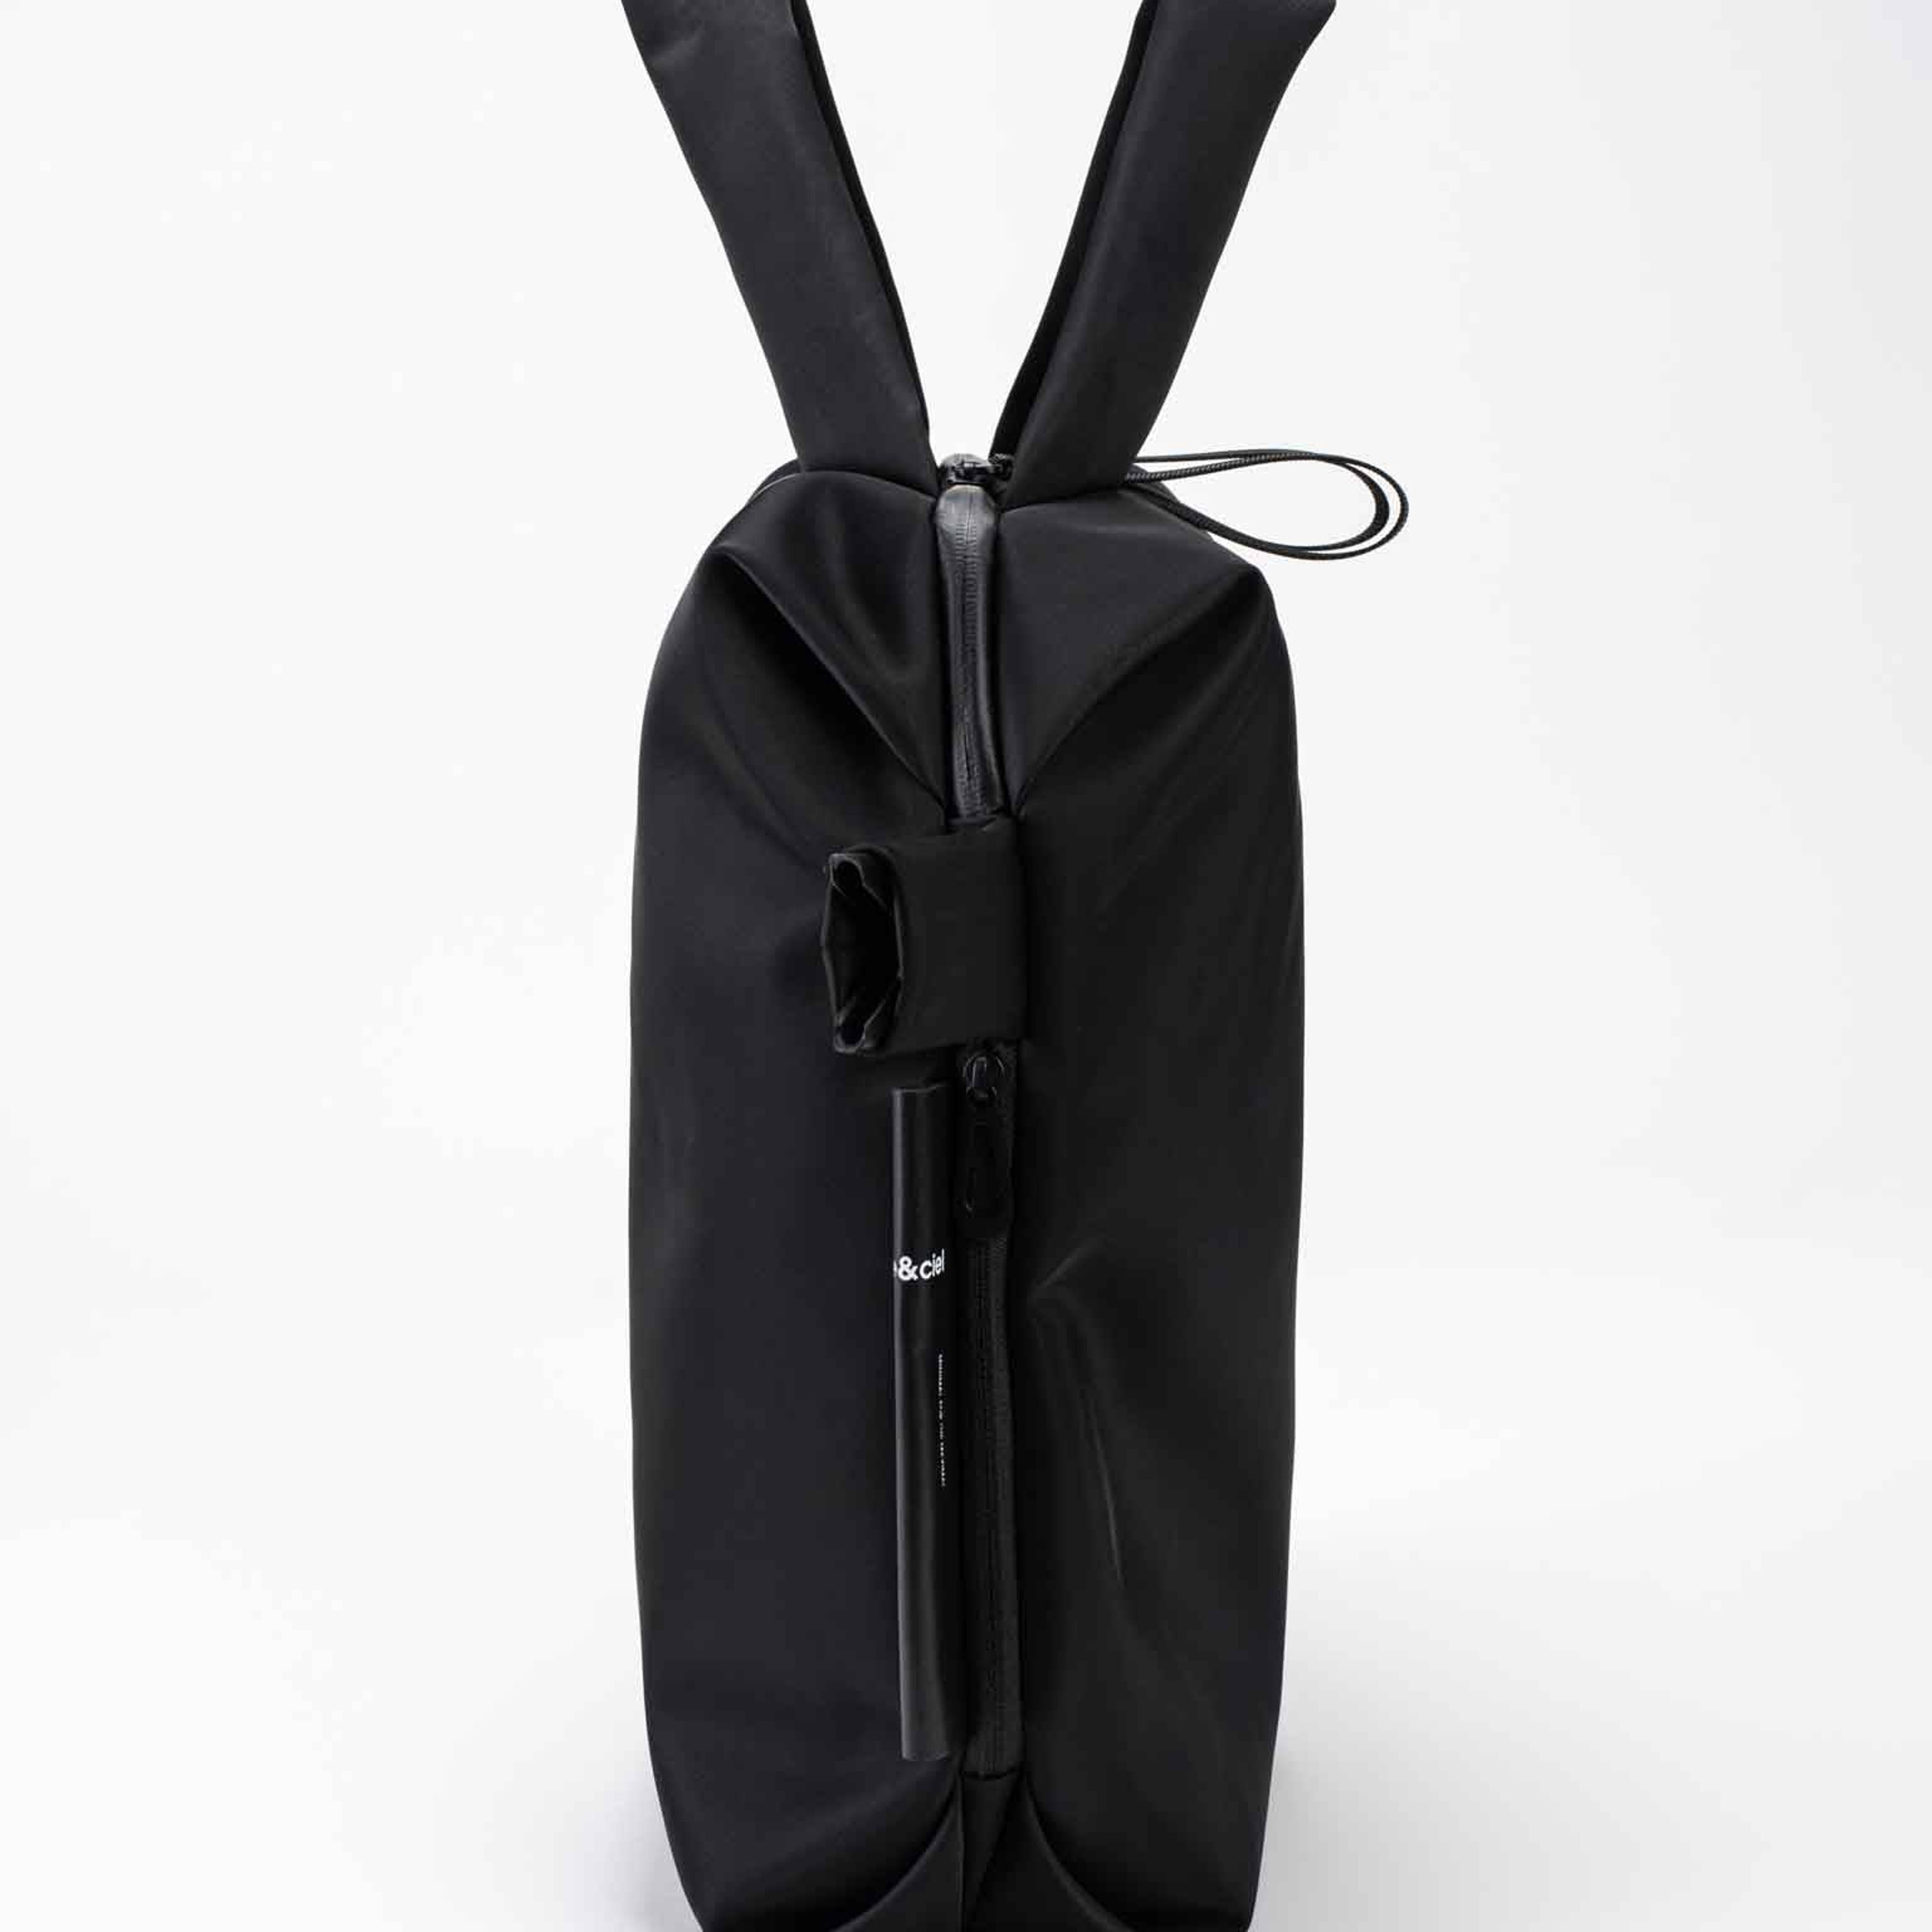 Rour Sleek Black Bag